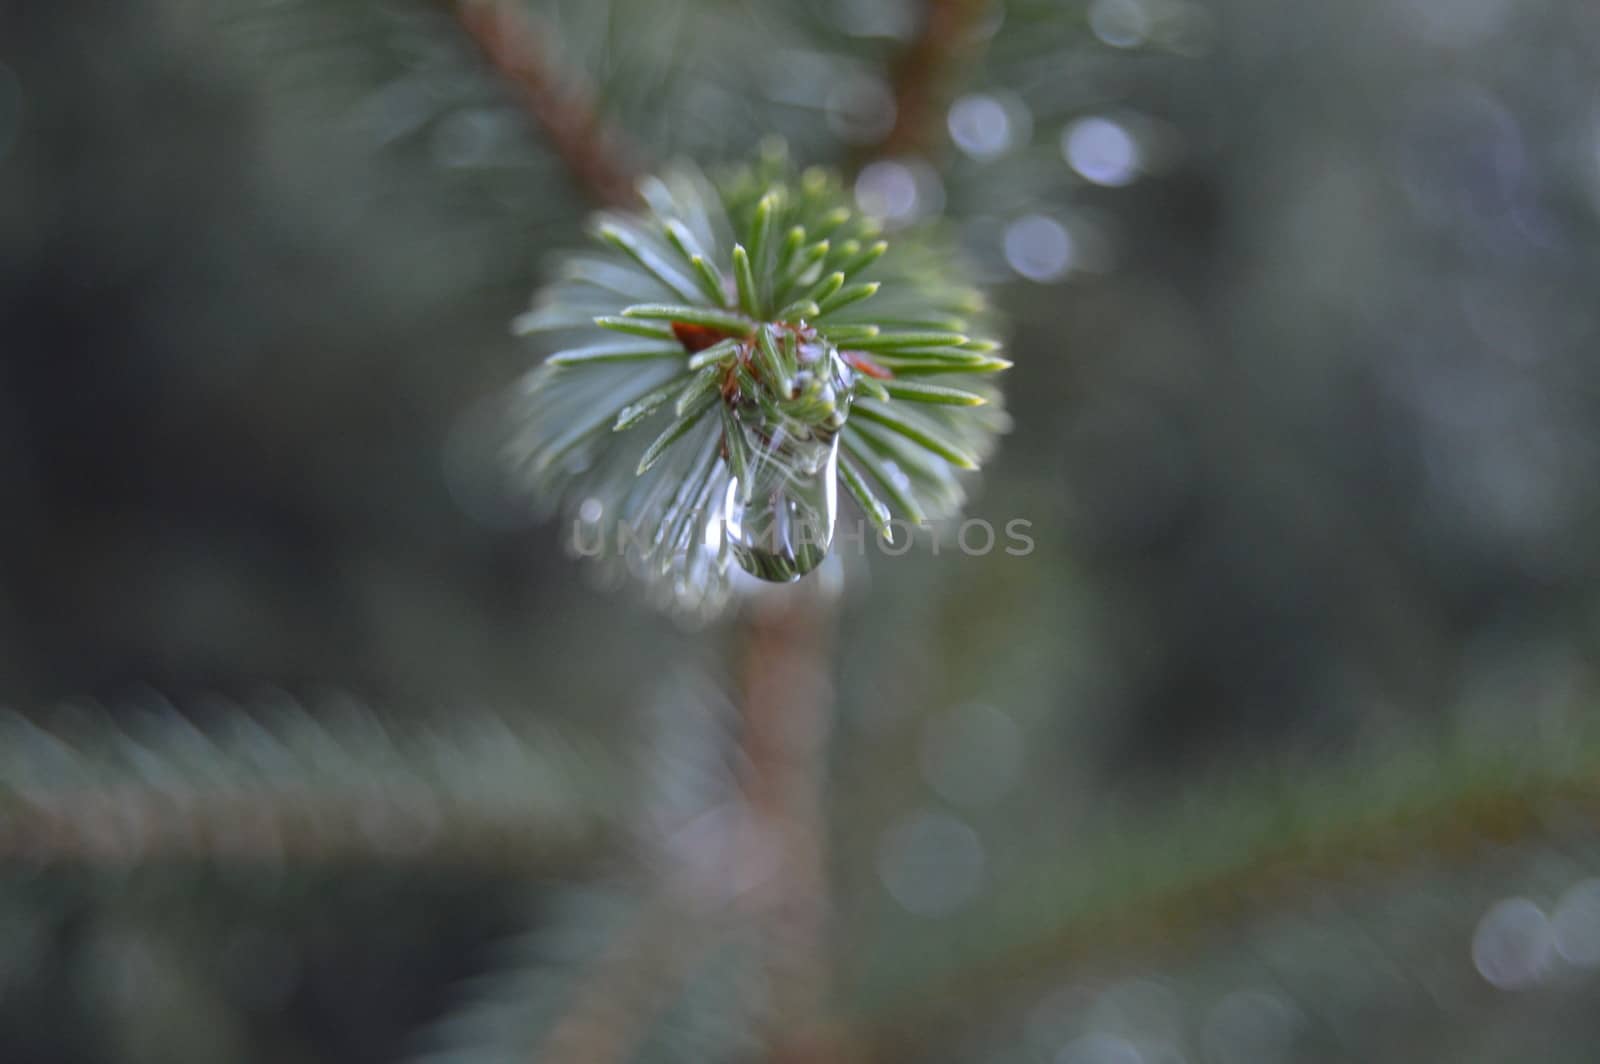 Norwegian spruce by Meretemy@hotmail.com